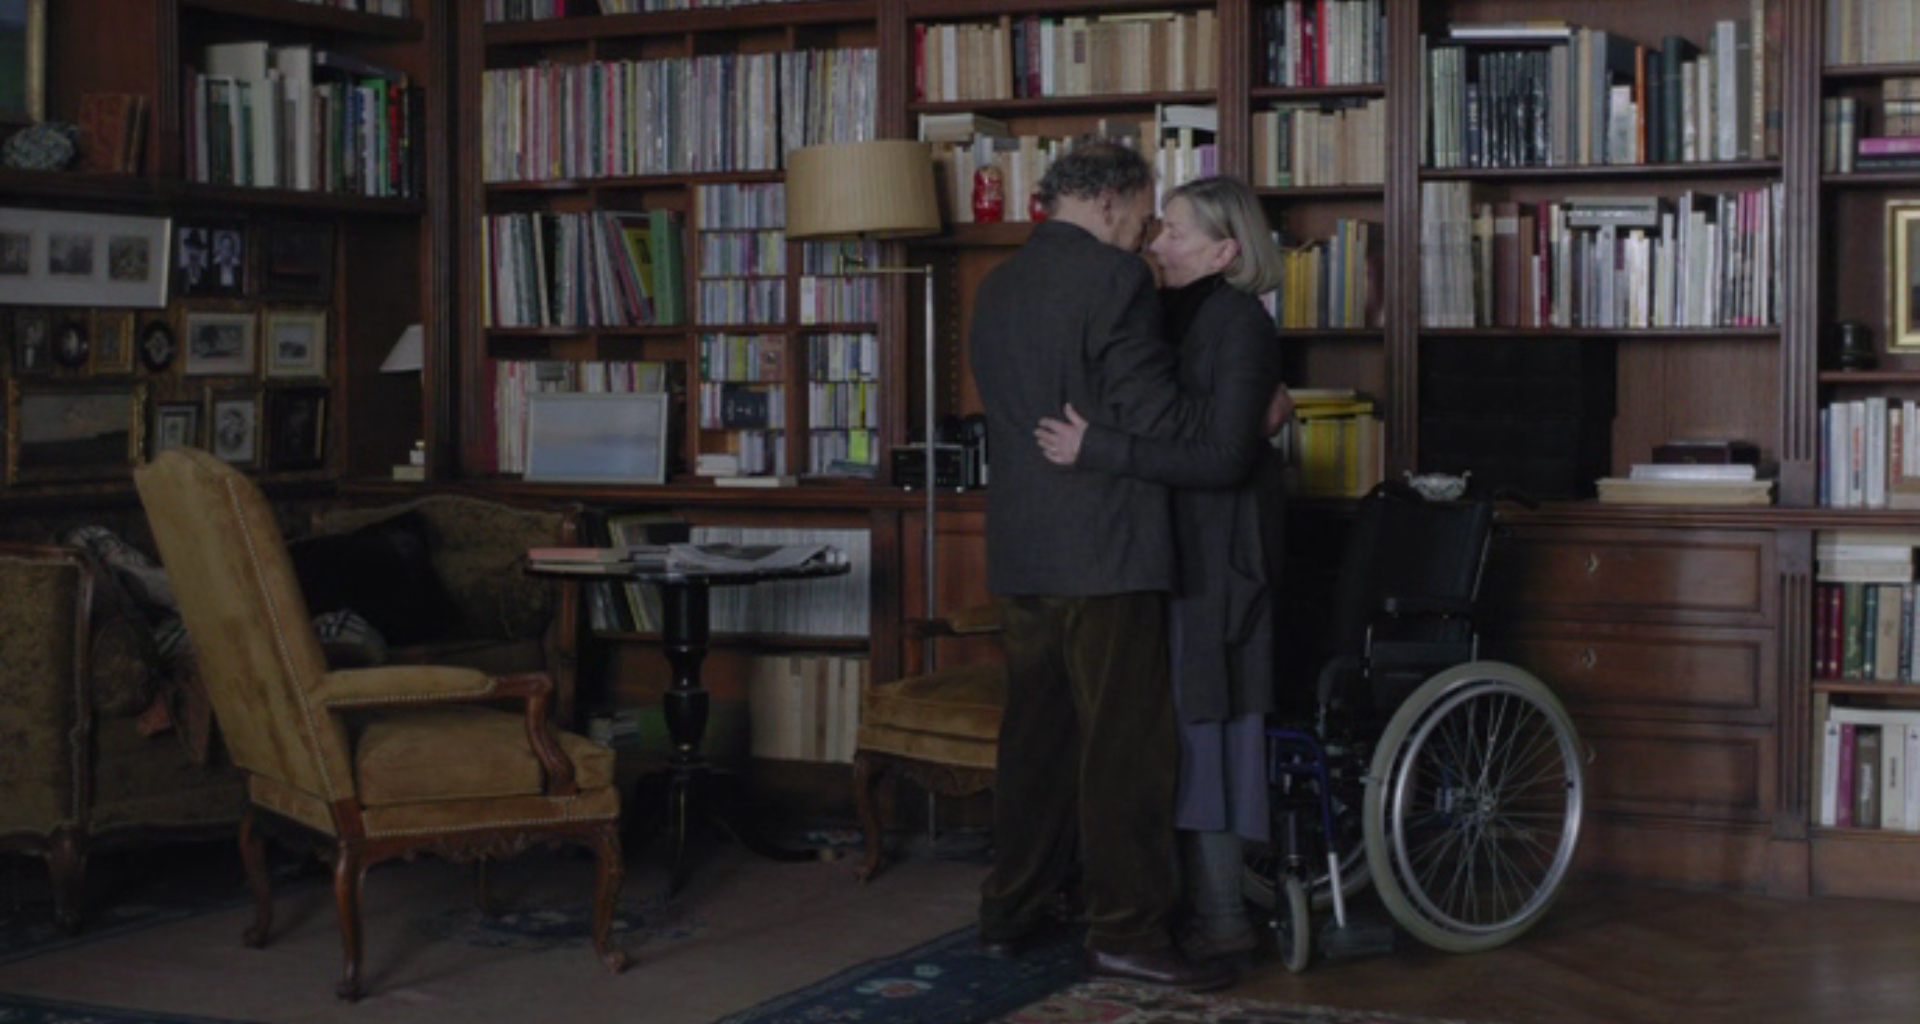 Elderly man and woman hug